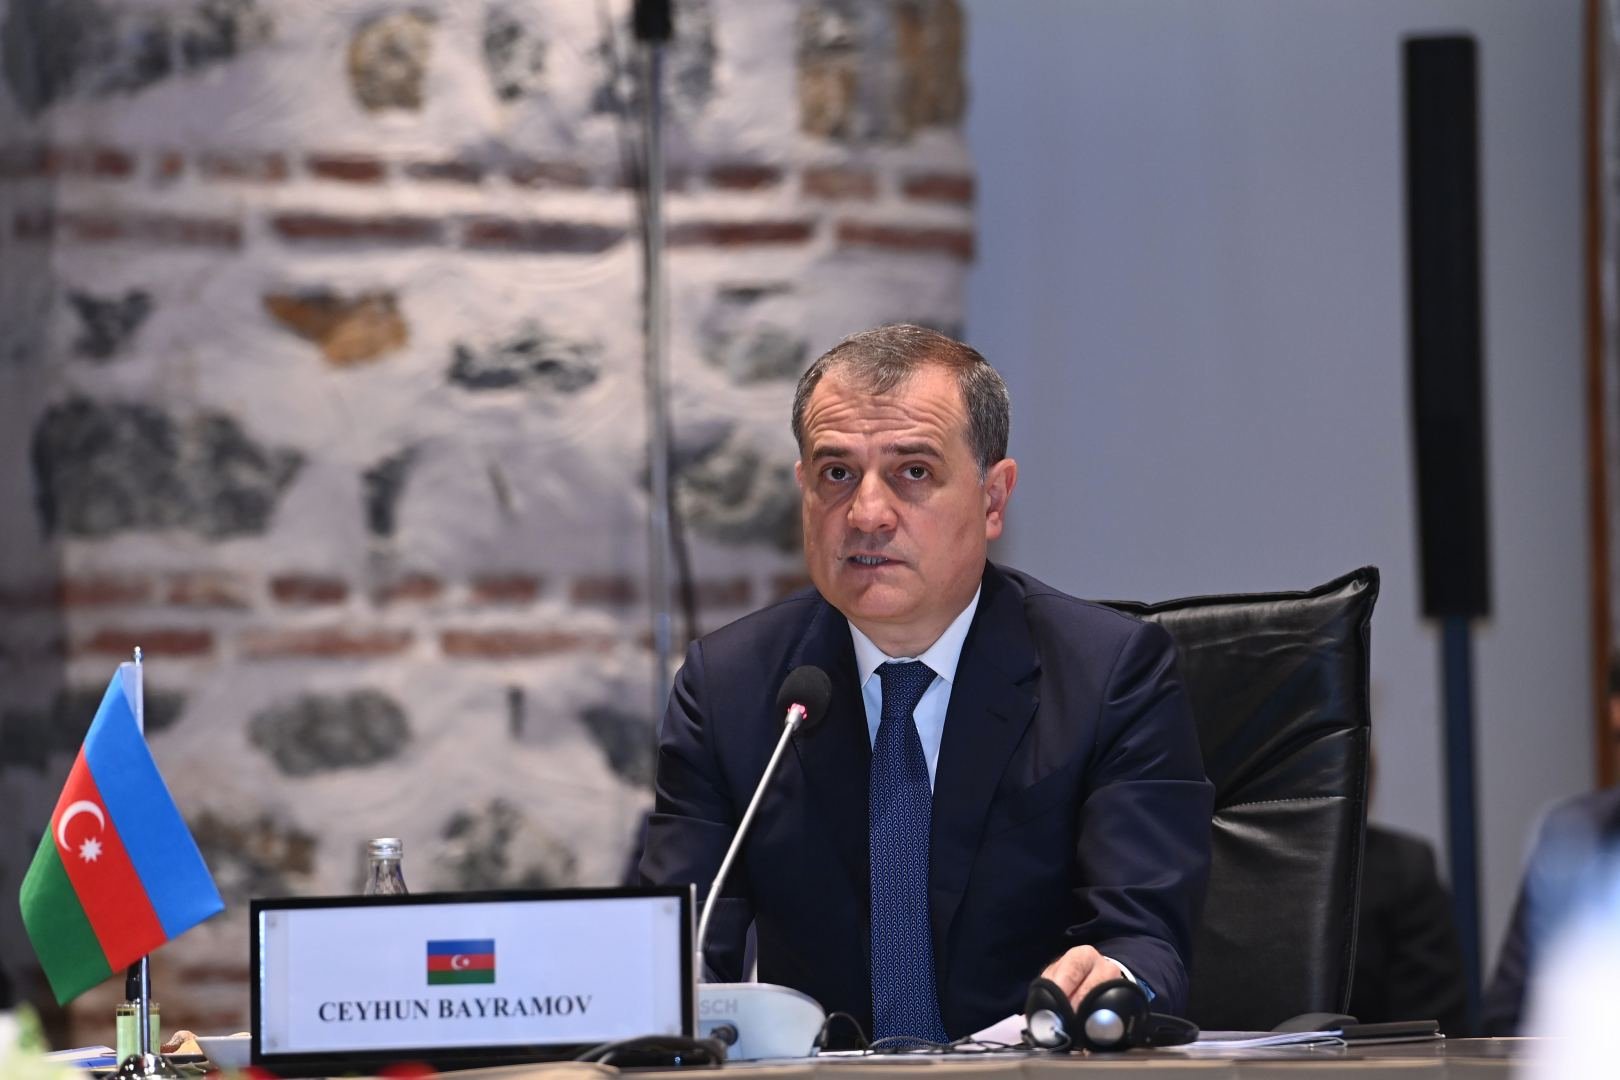 Armenia demonstrating its destructiveness under influence of third parties - unacceptable, Azerbaijani FM says